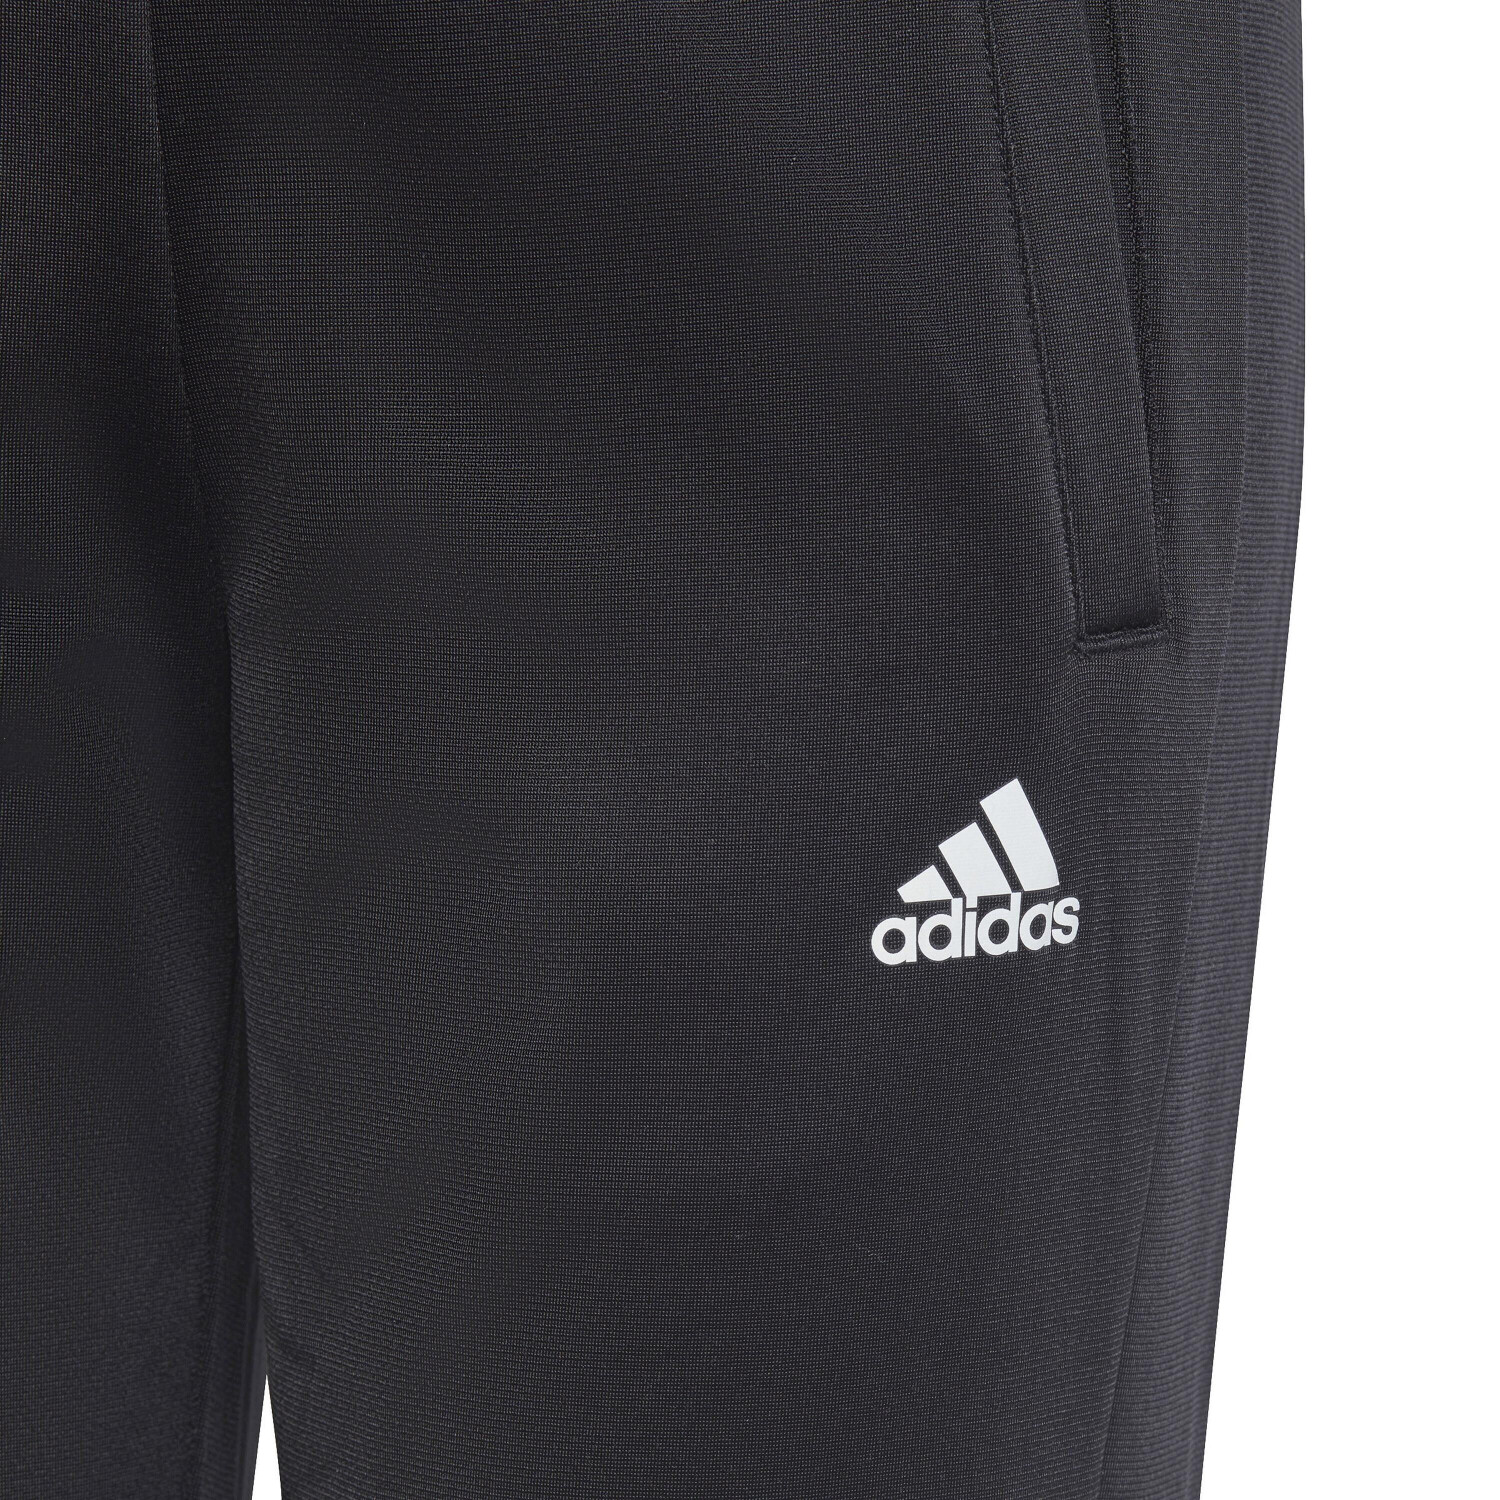 Adidas Boys Tracksuit ab € (IC5686) 31,99 black/white | bei Preisvergleich